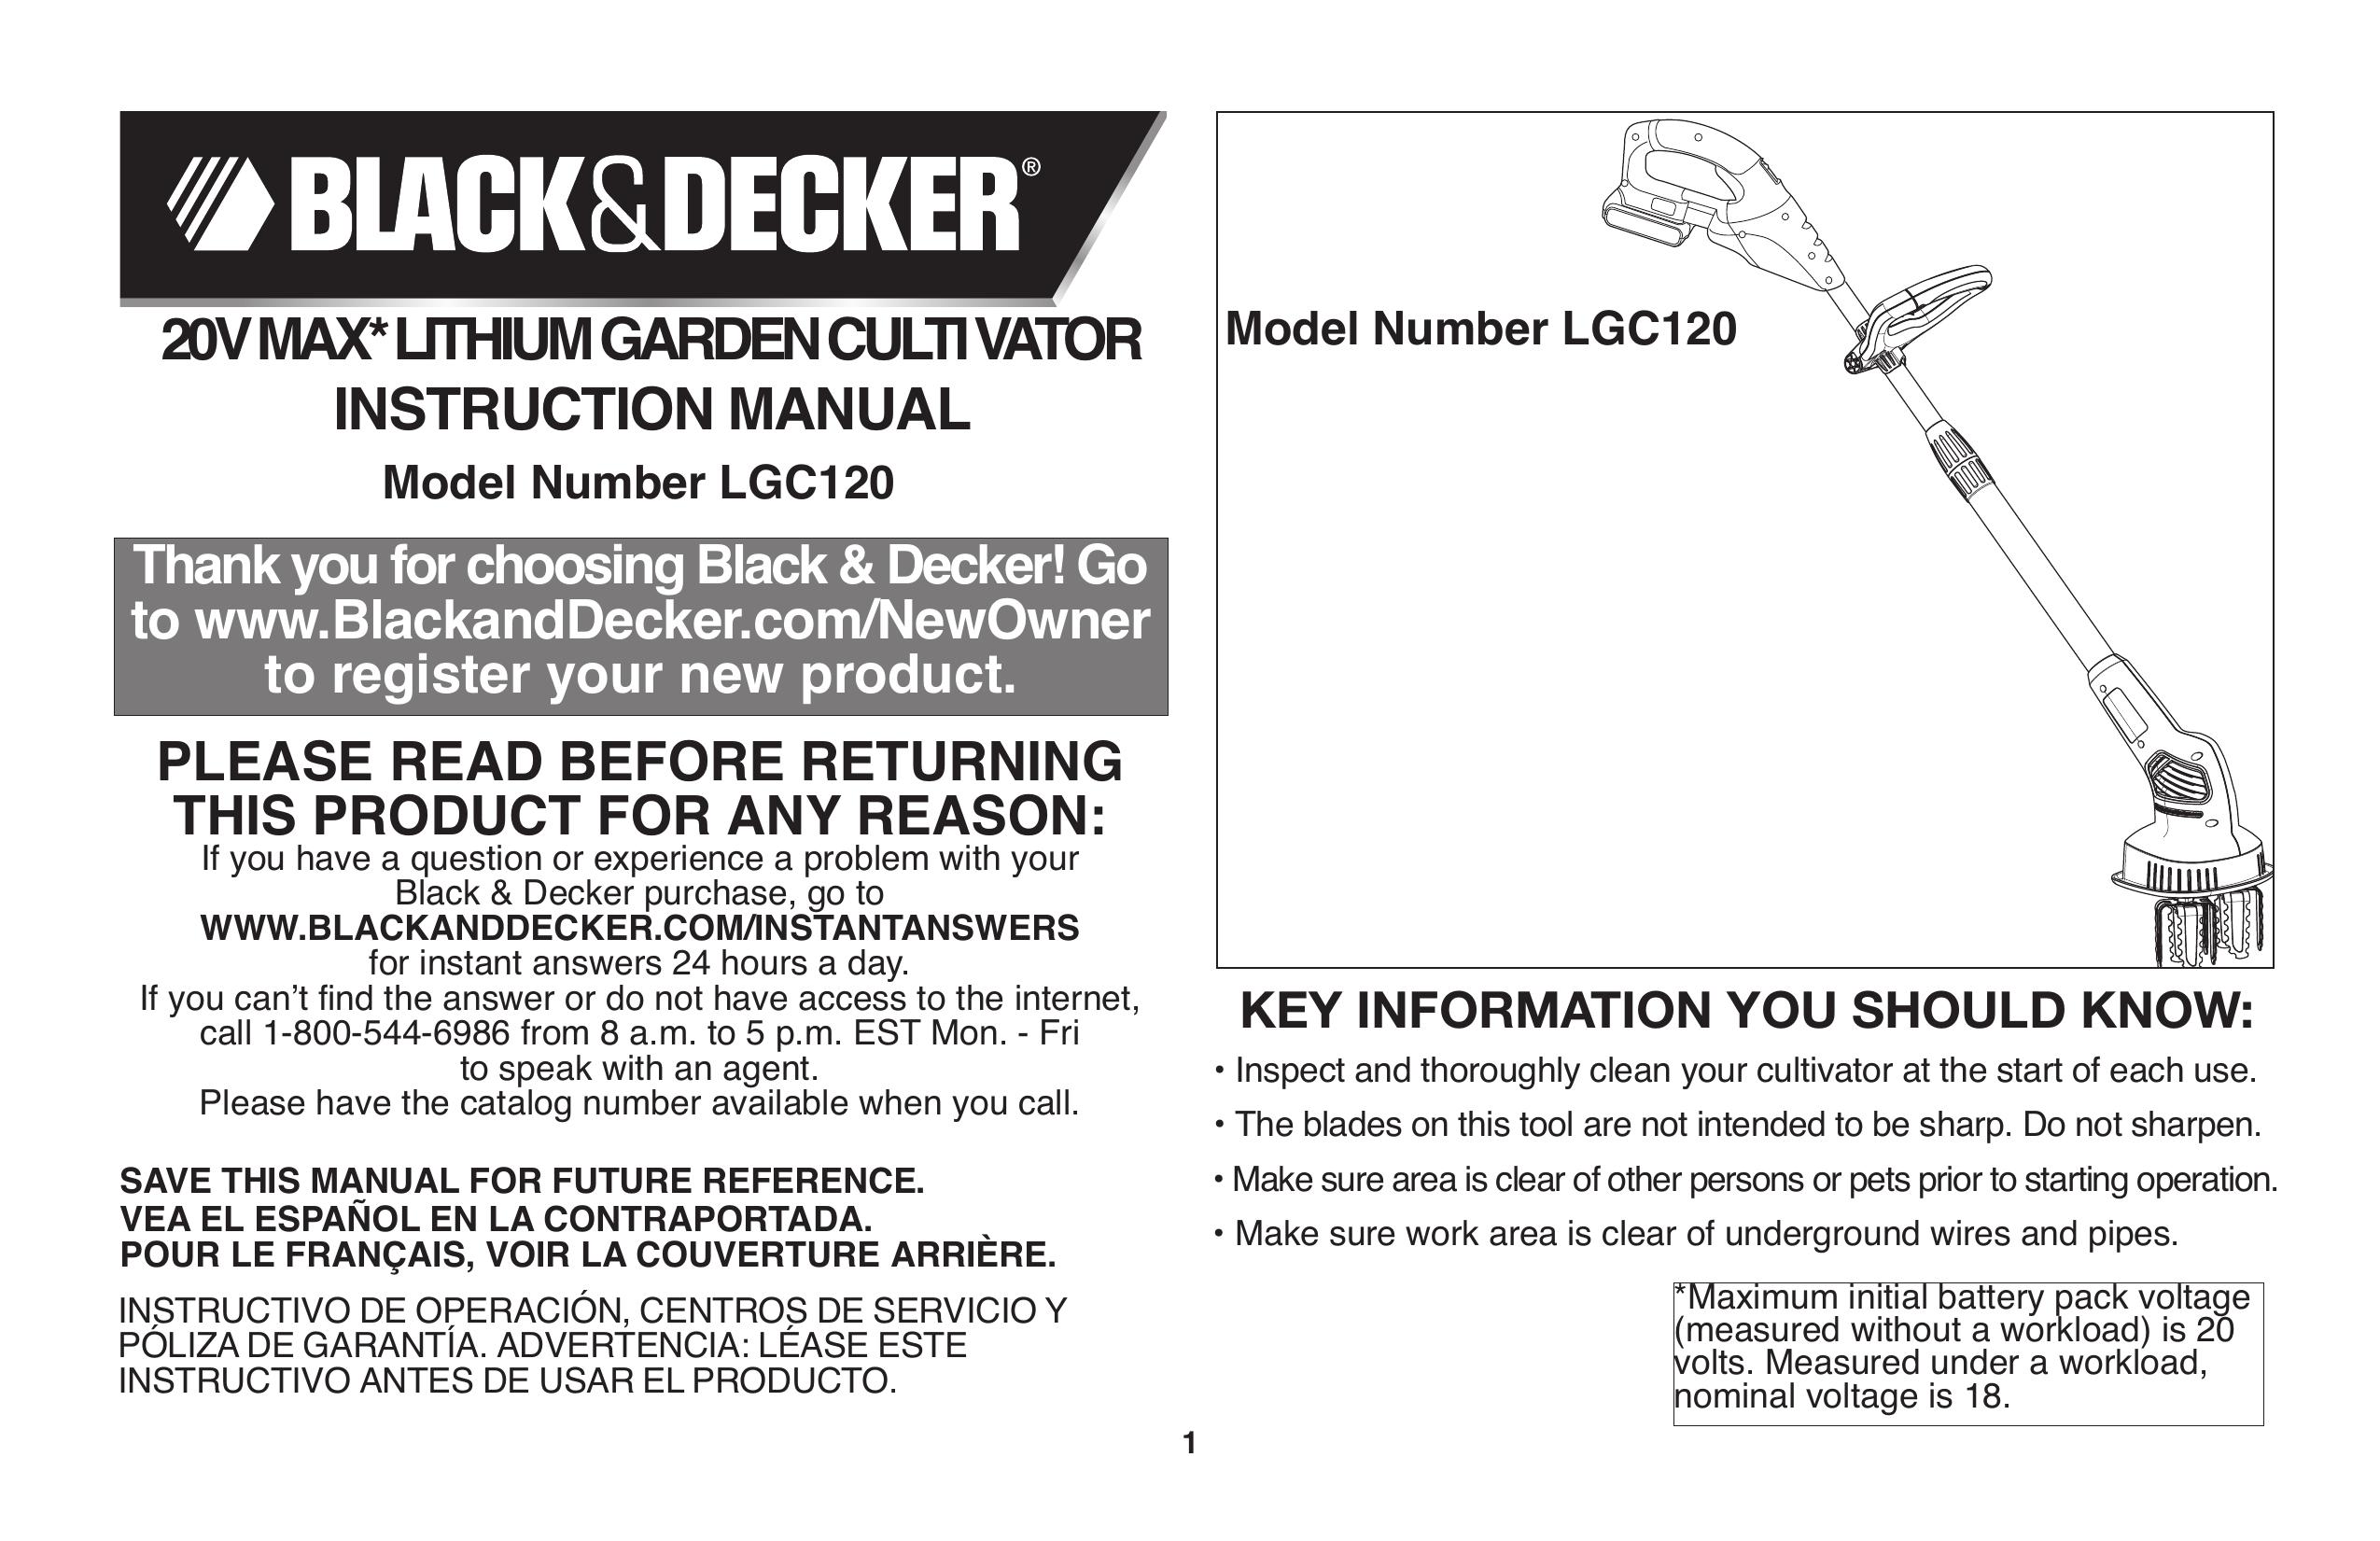 Black & Decker LGC120 Cultivator User Manual